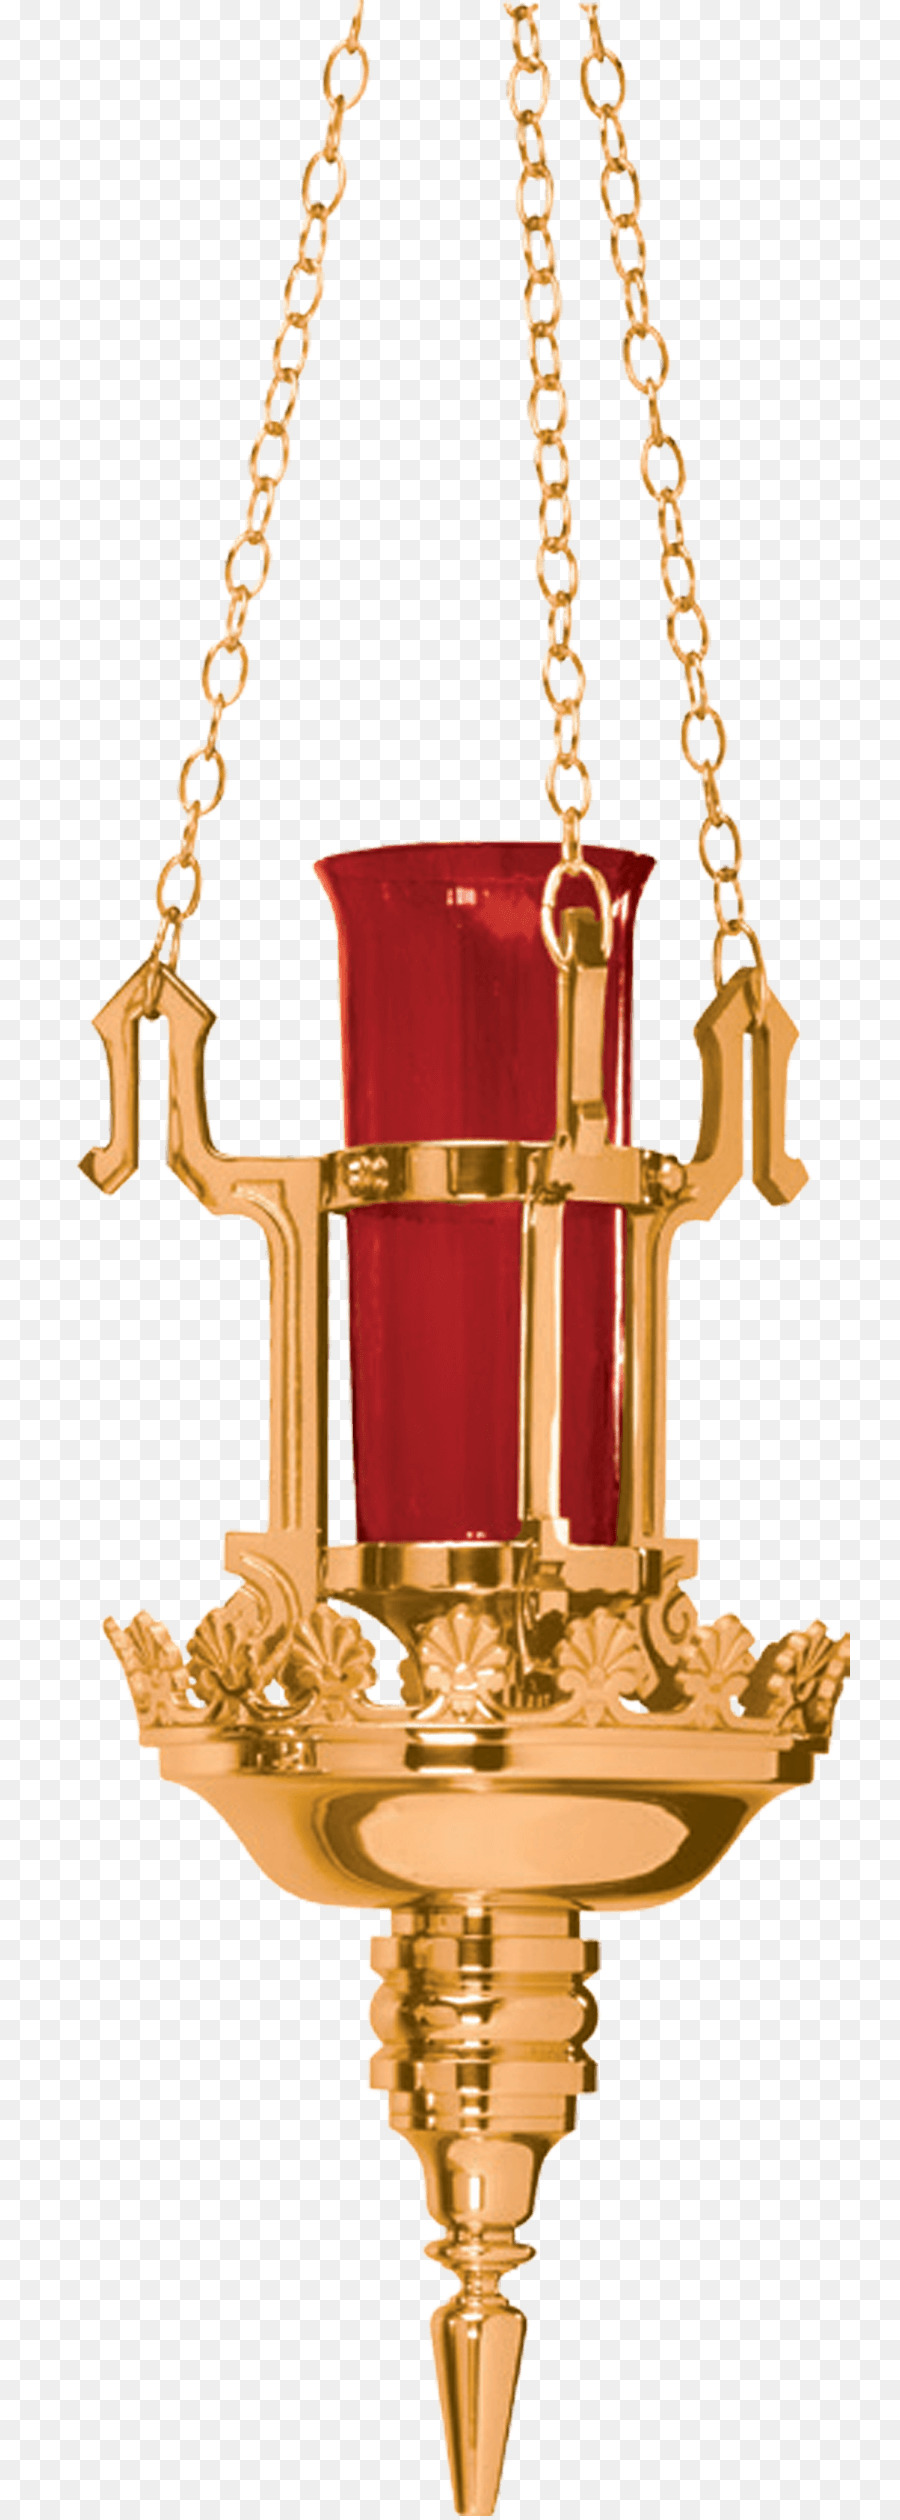 01504 Produkt-design Christmas ornament Gold - religiöse Stil Kronleuchter